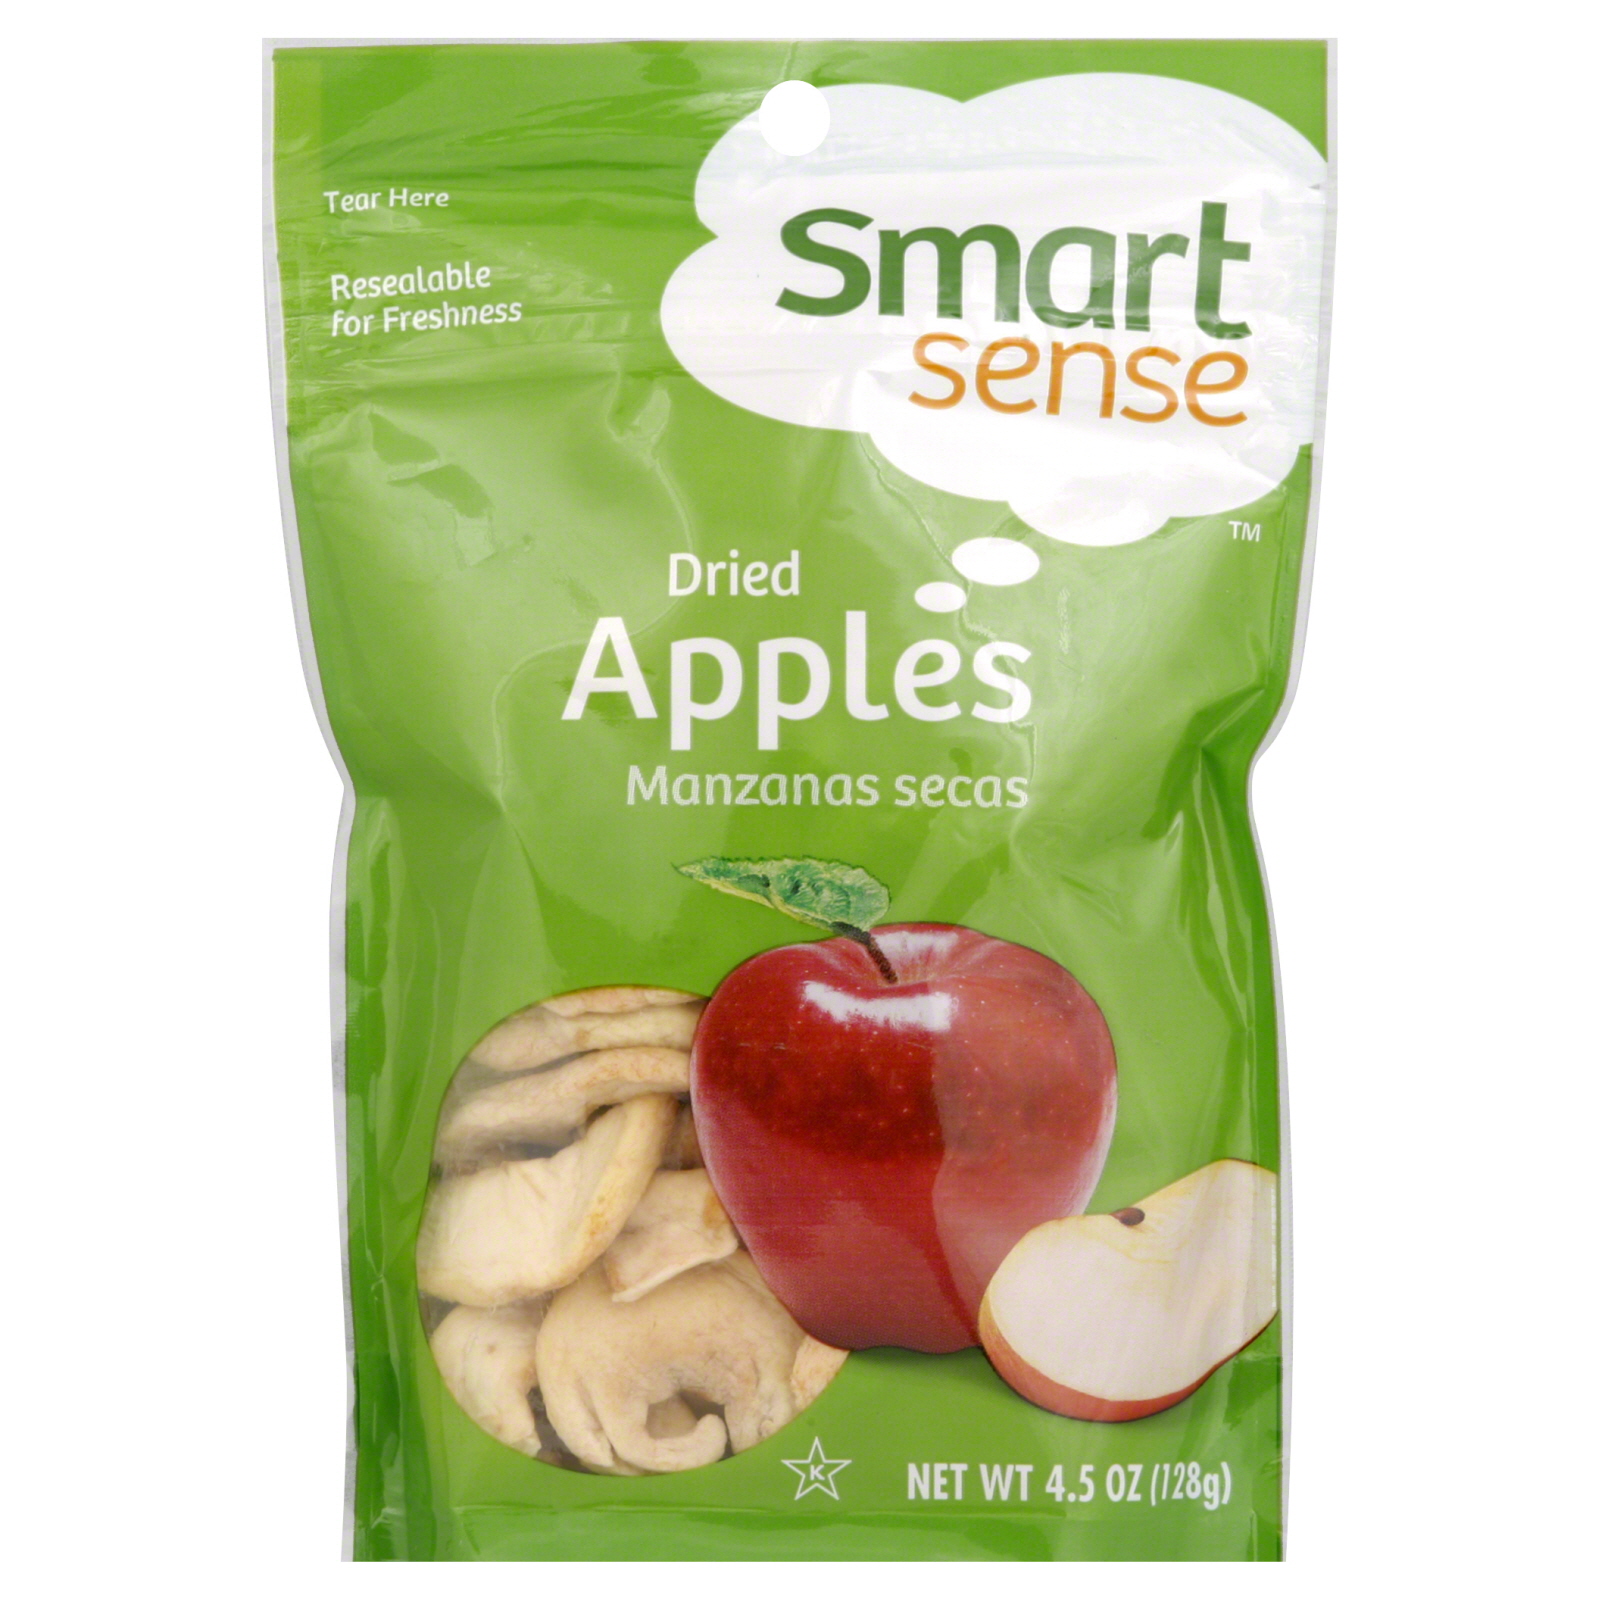 Smart Sense Apples, Dried, 4.5 oz (128 g)